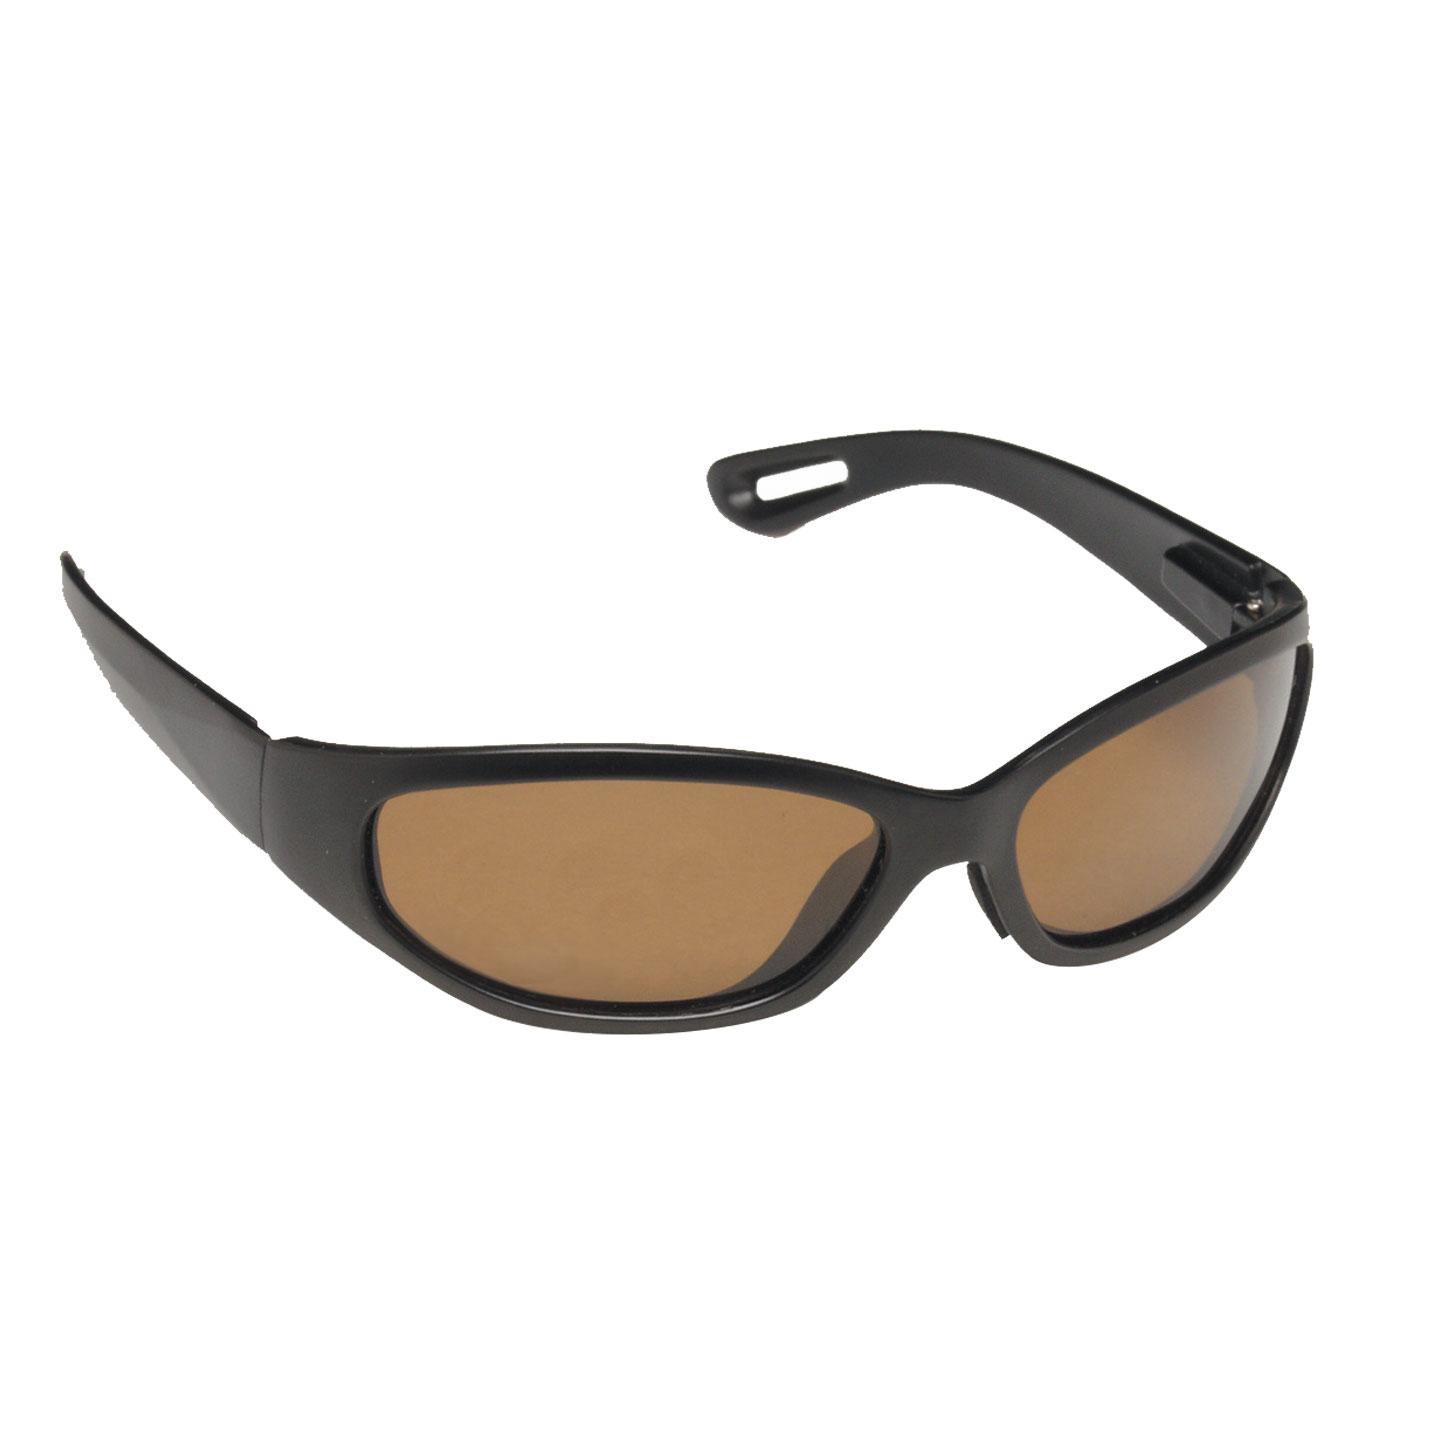 https://kleargo.com/wp-content/uploads/2017/08/Sport-Fisherman-Polarized-Sunglasses.jpg